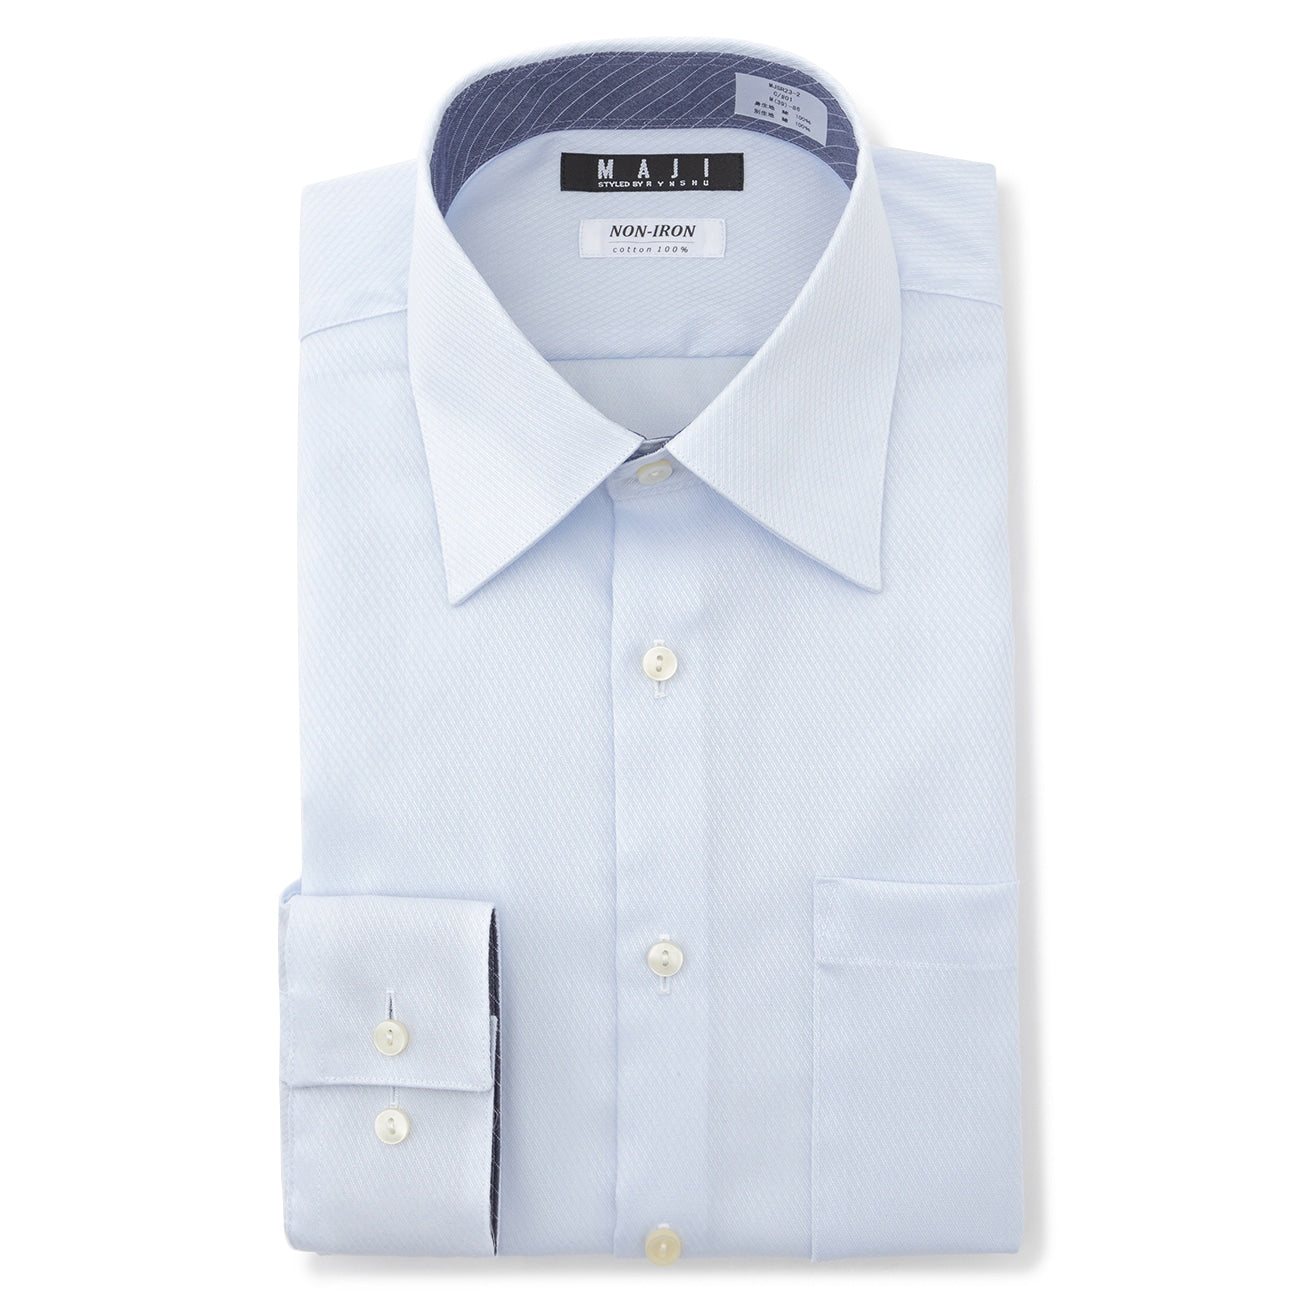 MAJI Non-iron Cotton Stretch Blue Woven Pattern Regular Collar Shirt - Slim